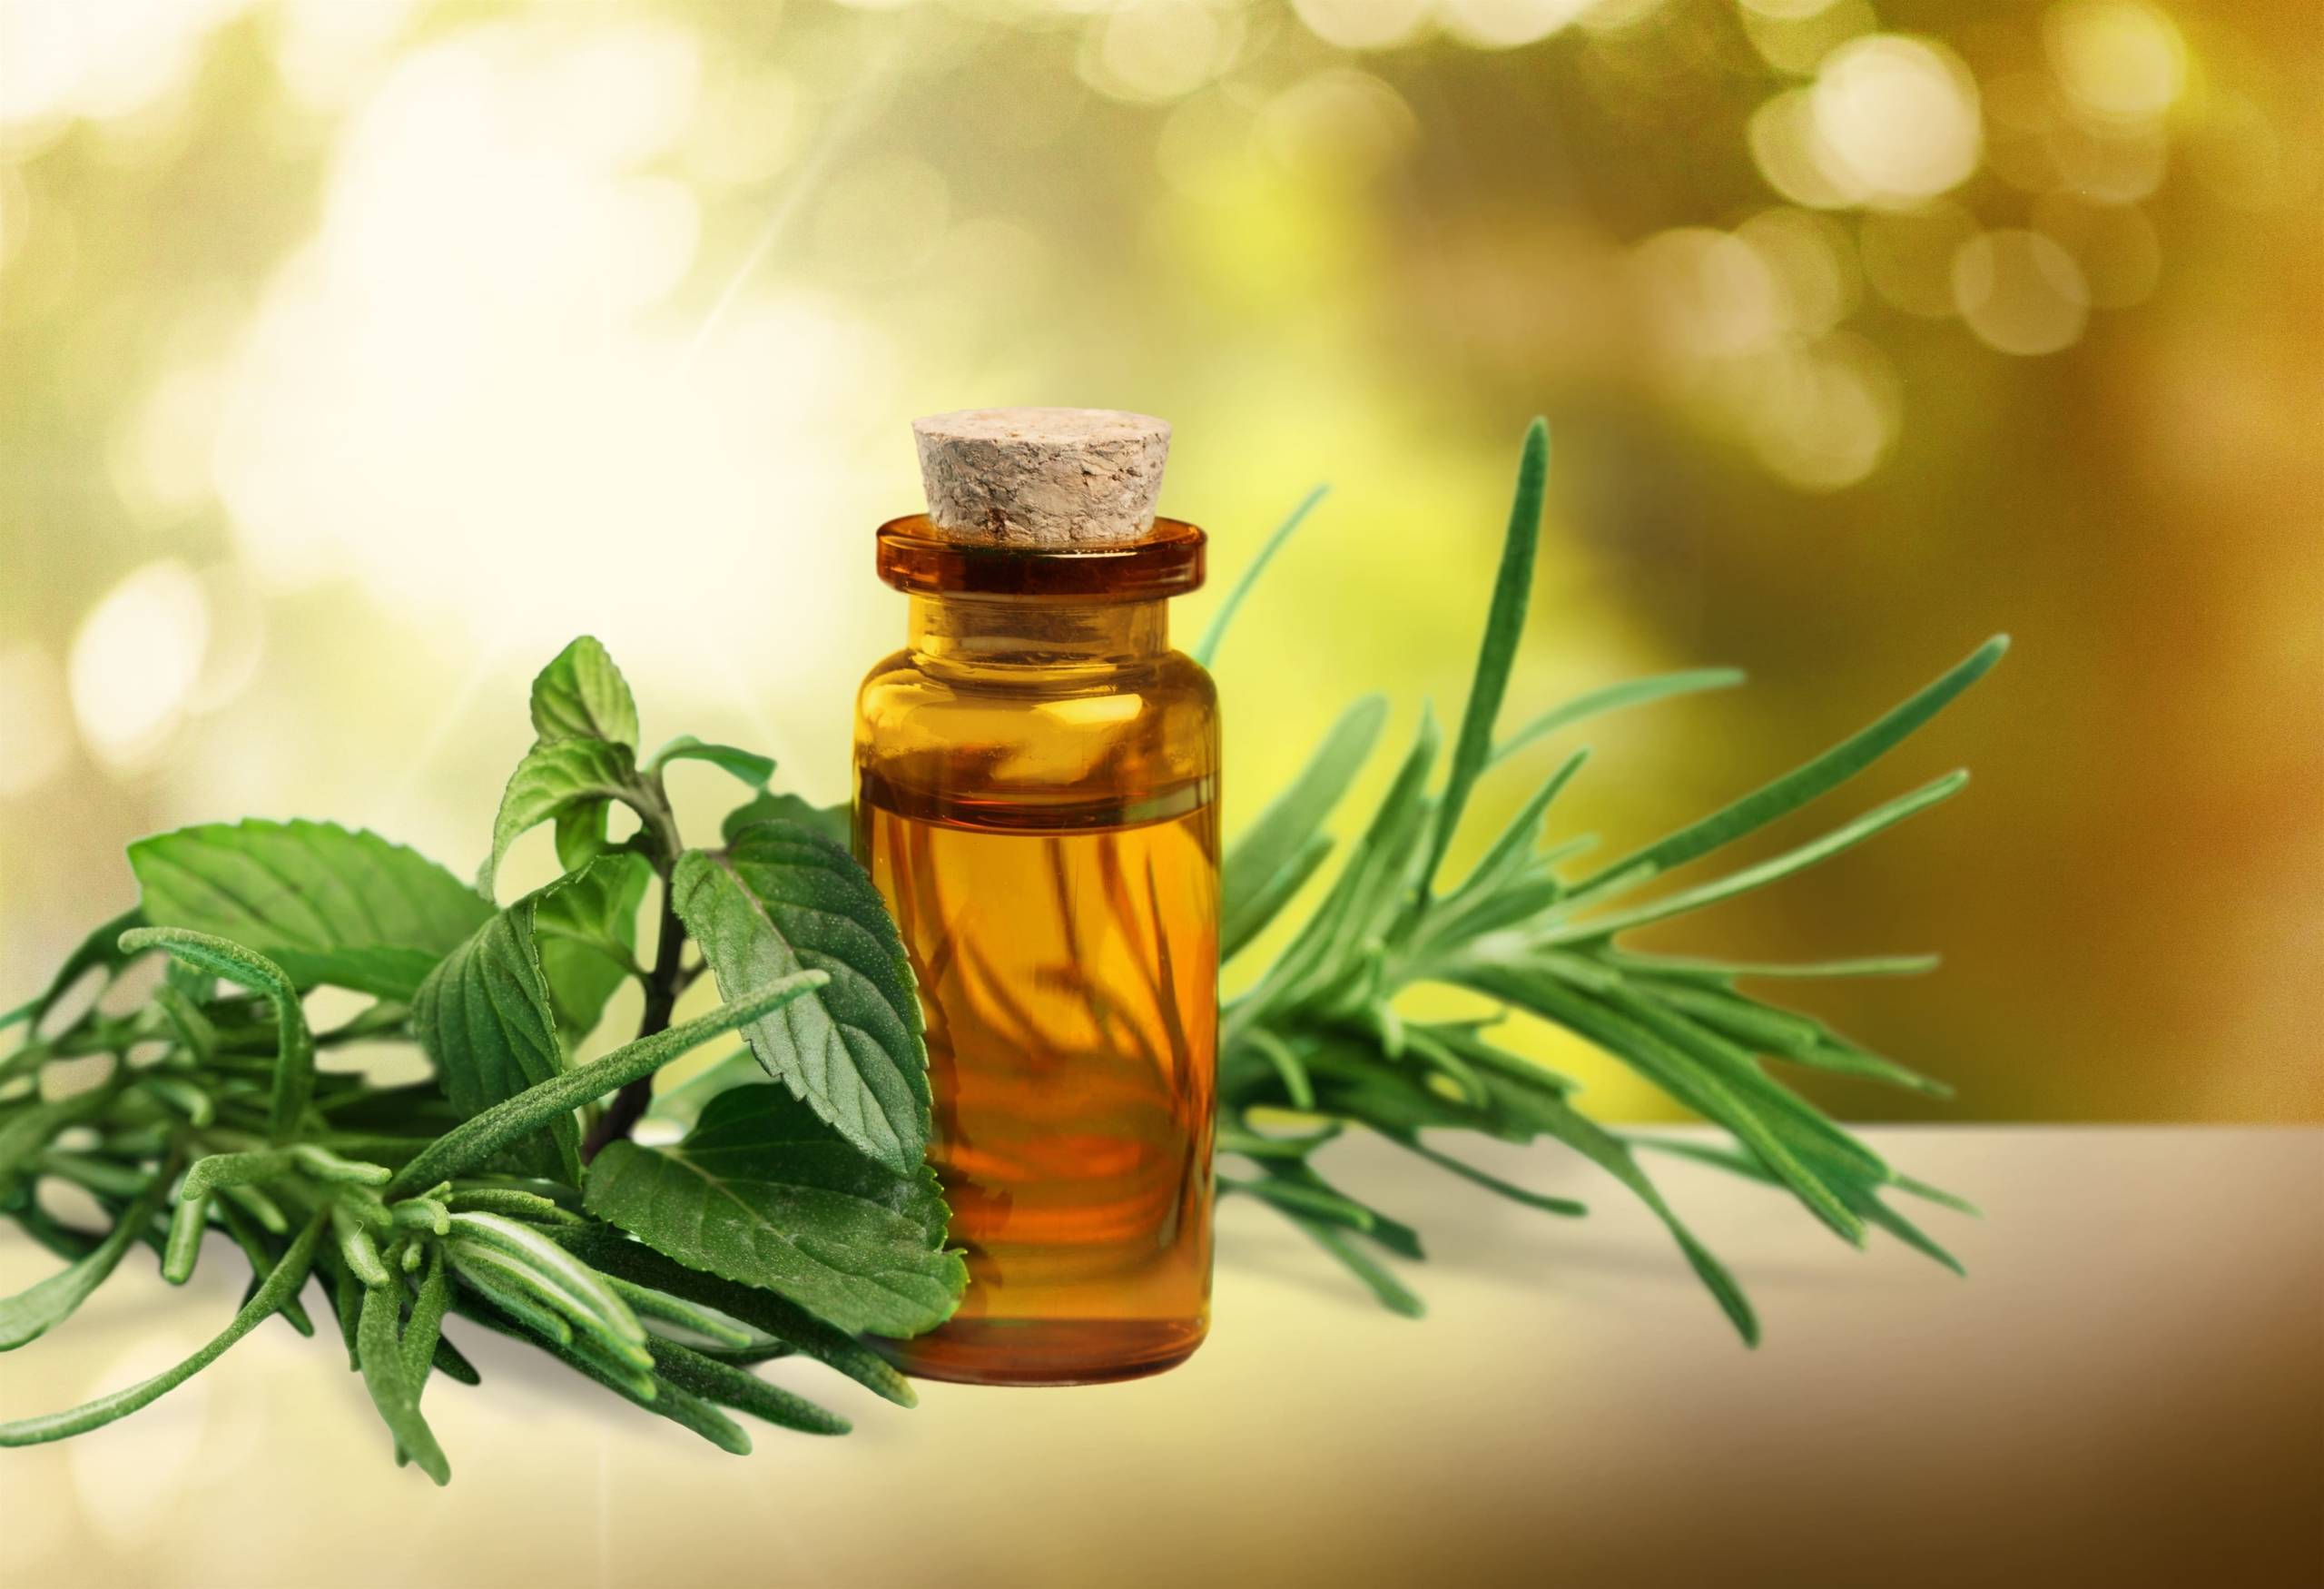 Tea Tree Oil: Health Benefits and Uses - HealthifyMe